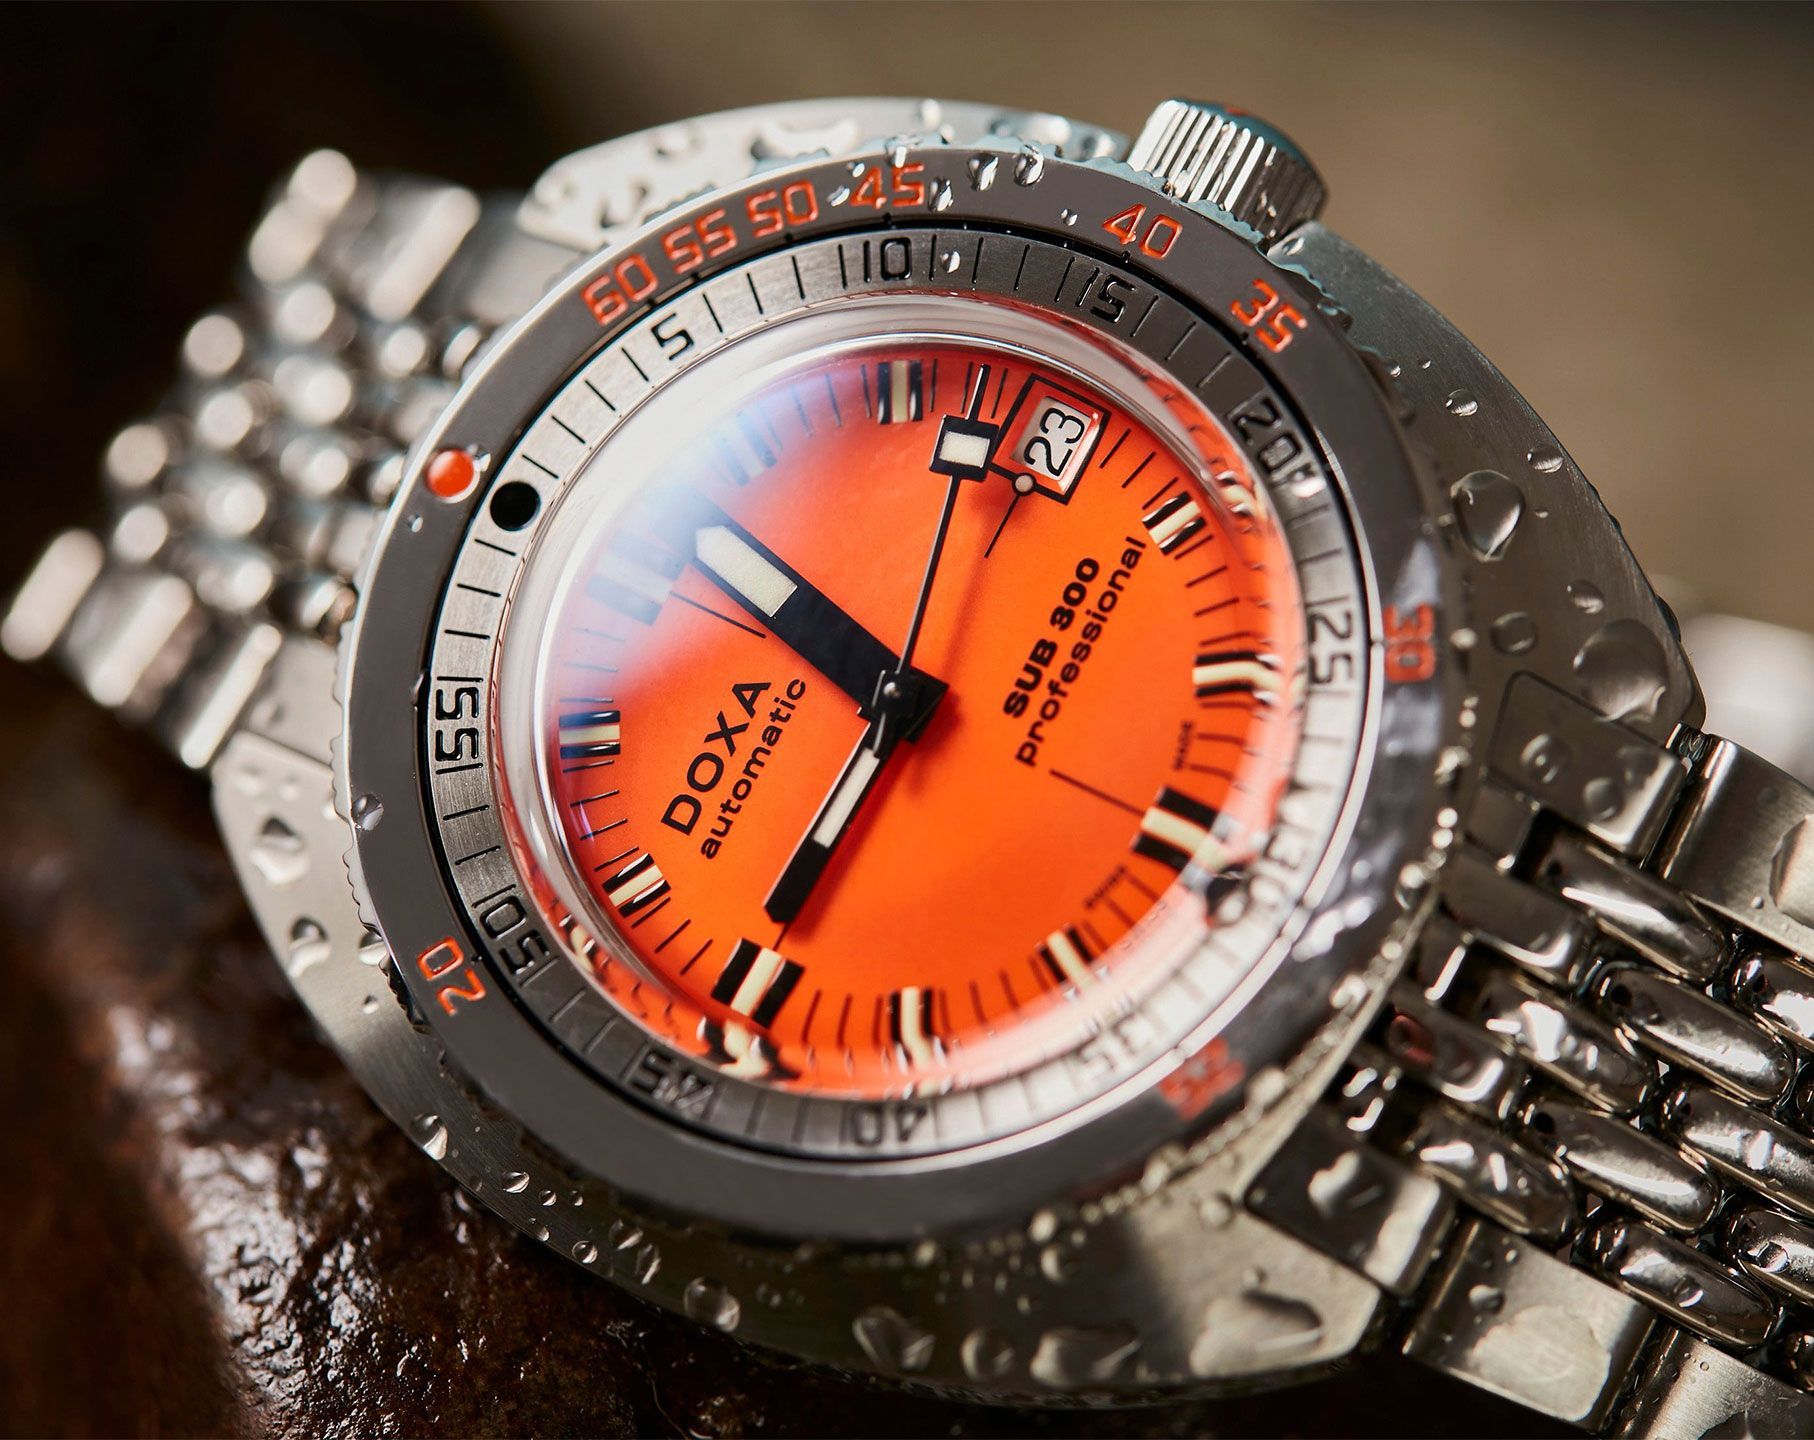 Doxa Professional 42.5 mm Watch in Orange Dial For Men - 5